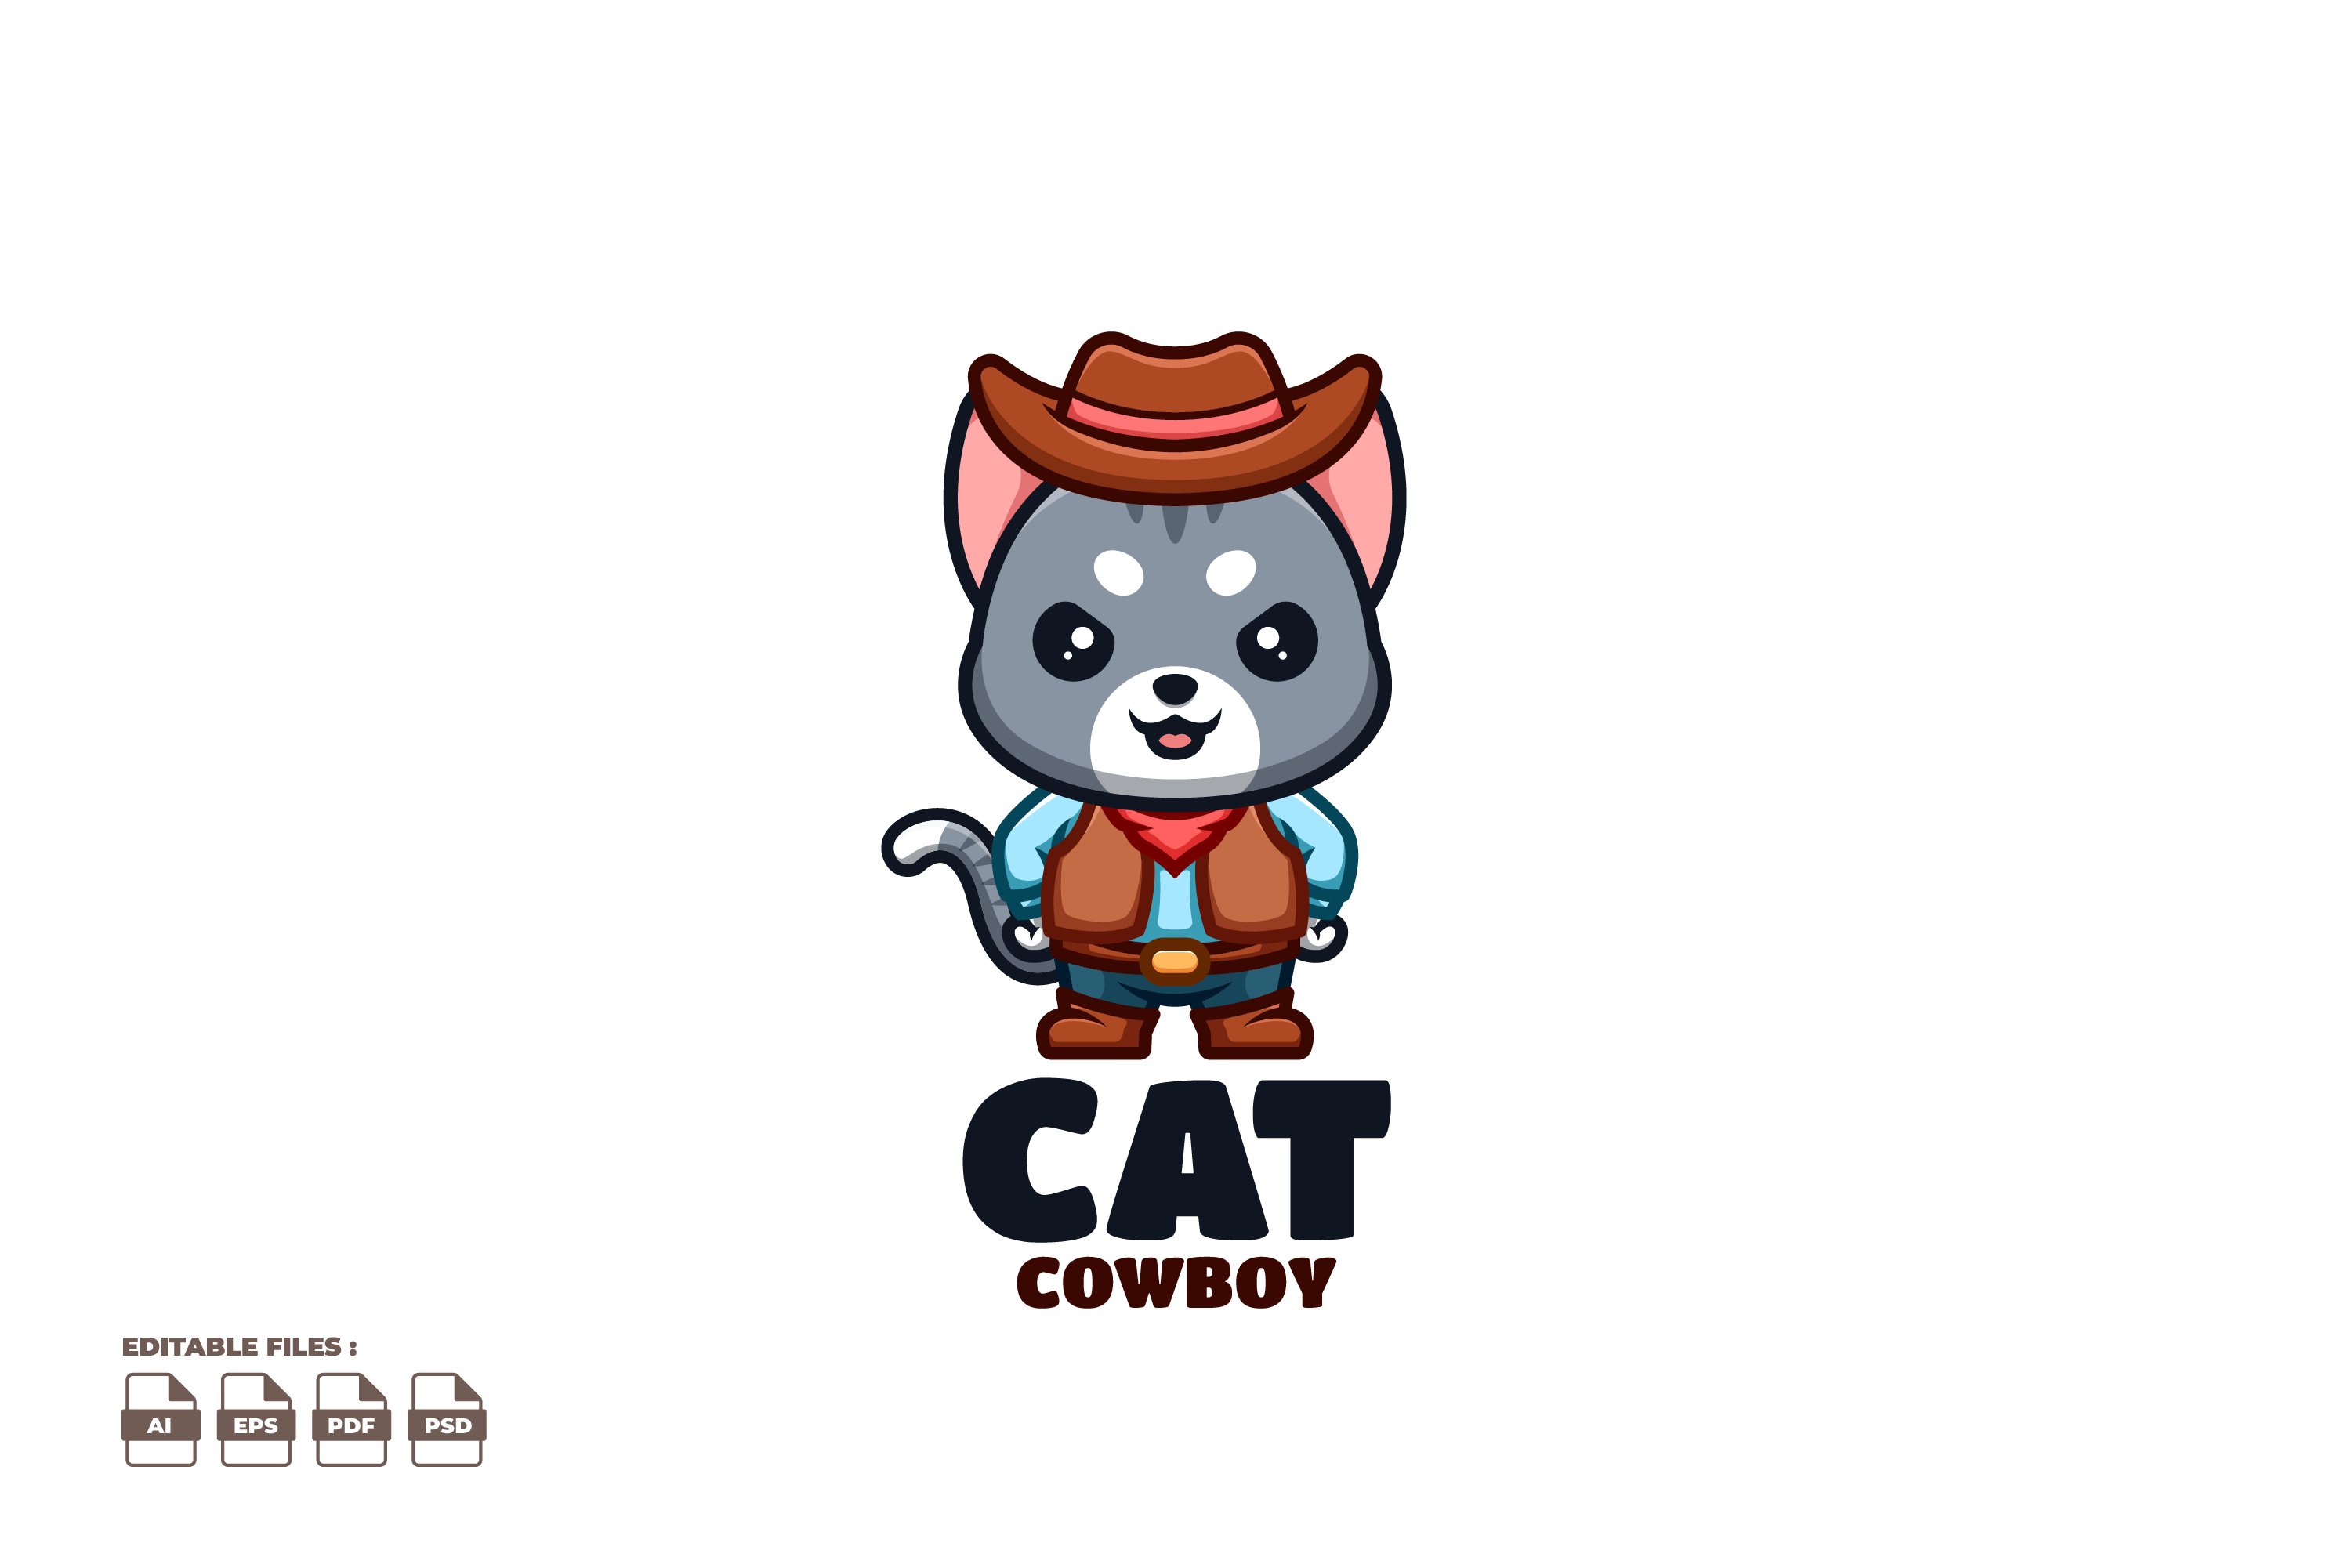 Cowboy Domestic Cat Cute Mascot Logo cover image.